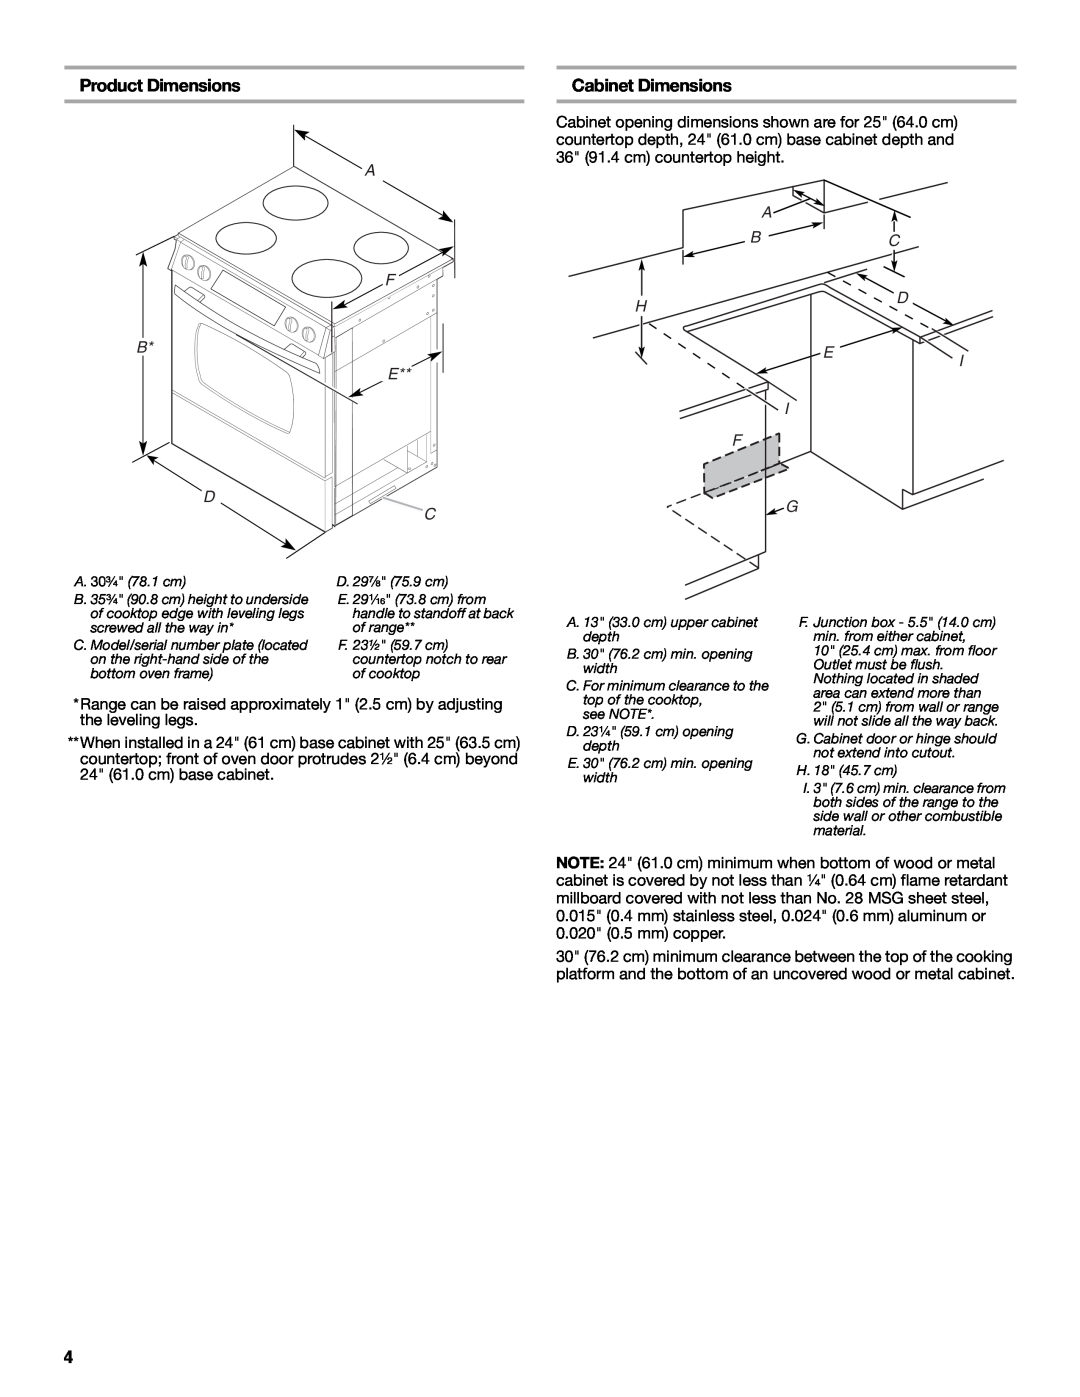 Jenn-Air W10430955A installation instructions Product Dimensions, Cabinet Dimensions, A F E C, A Bc, Ei I F G 